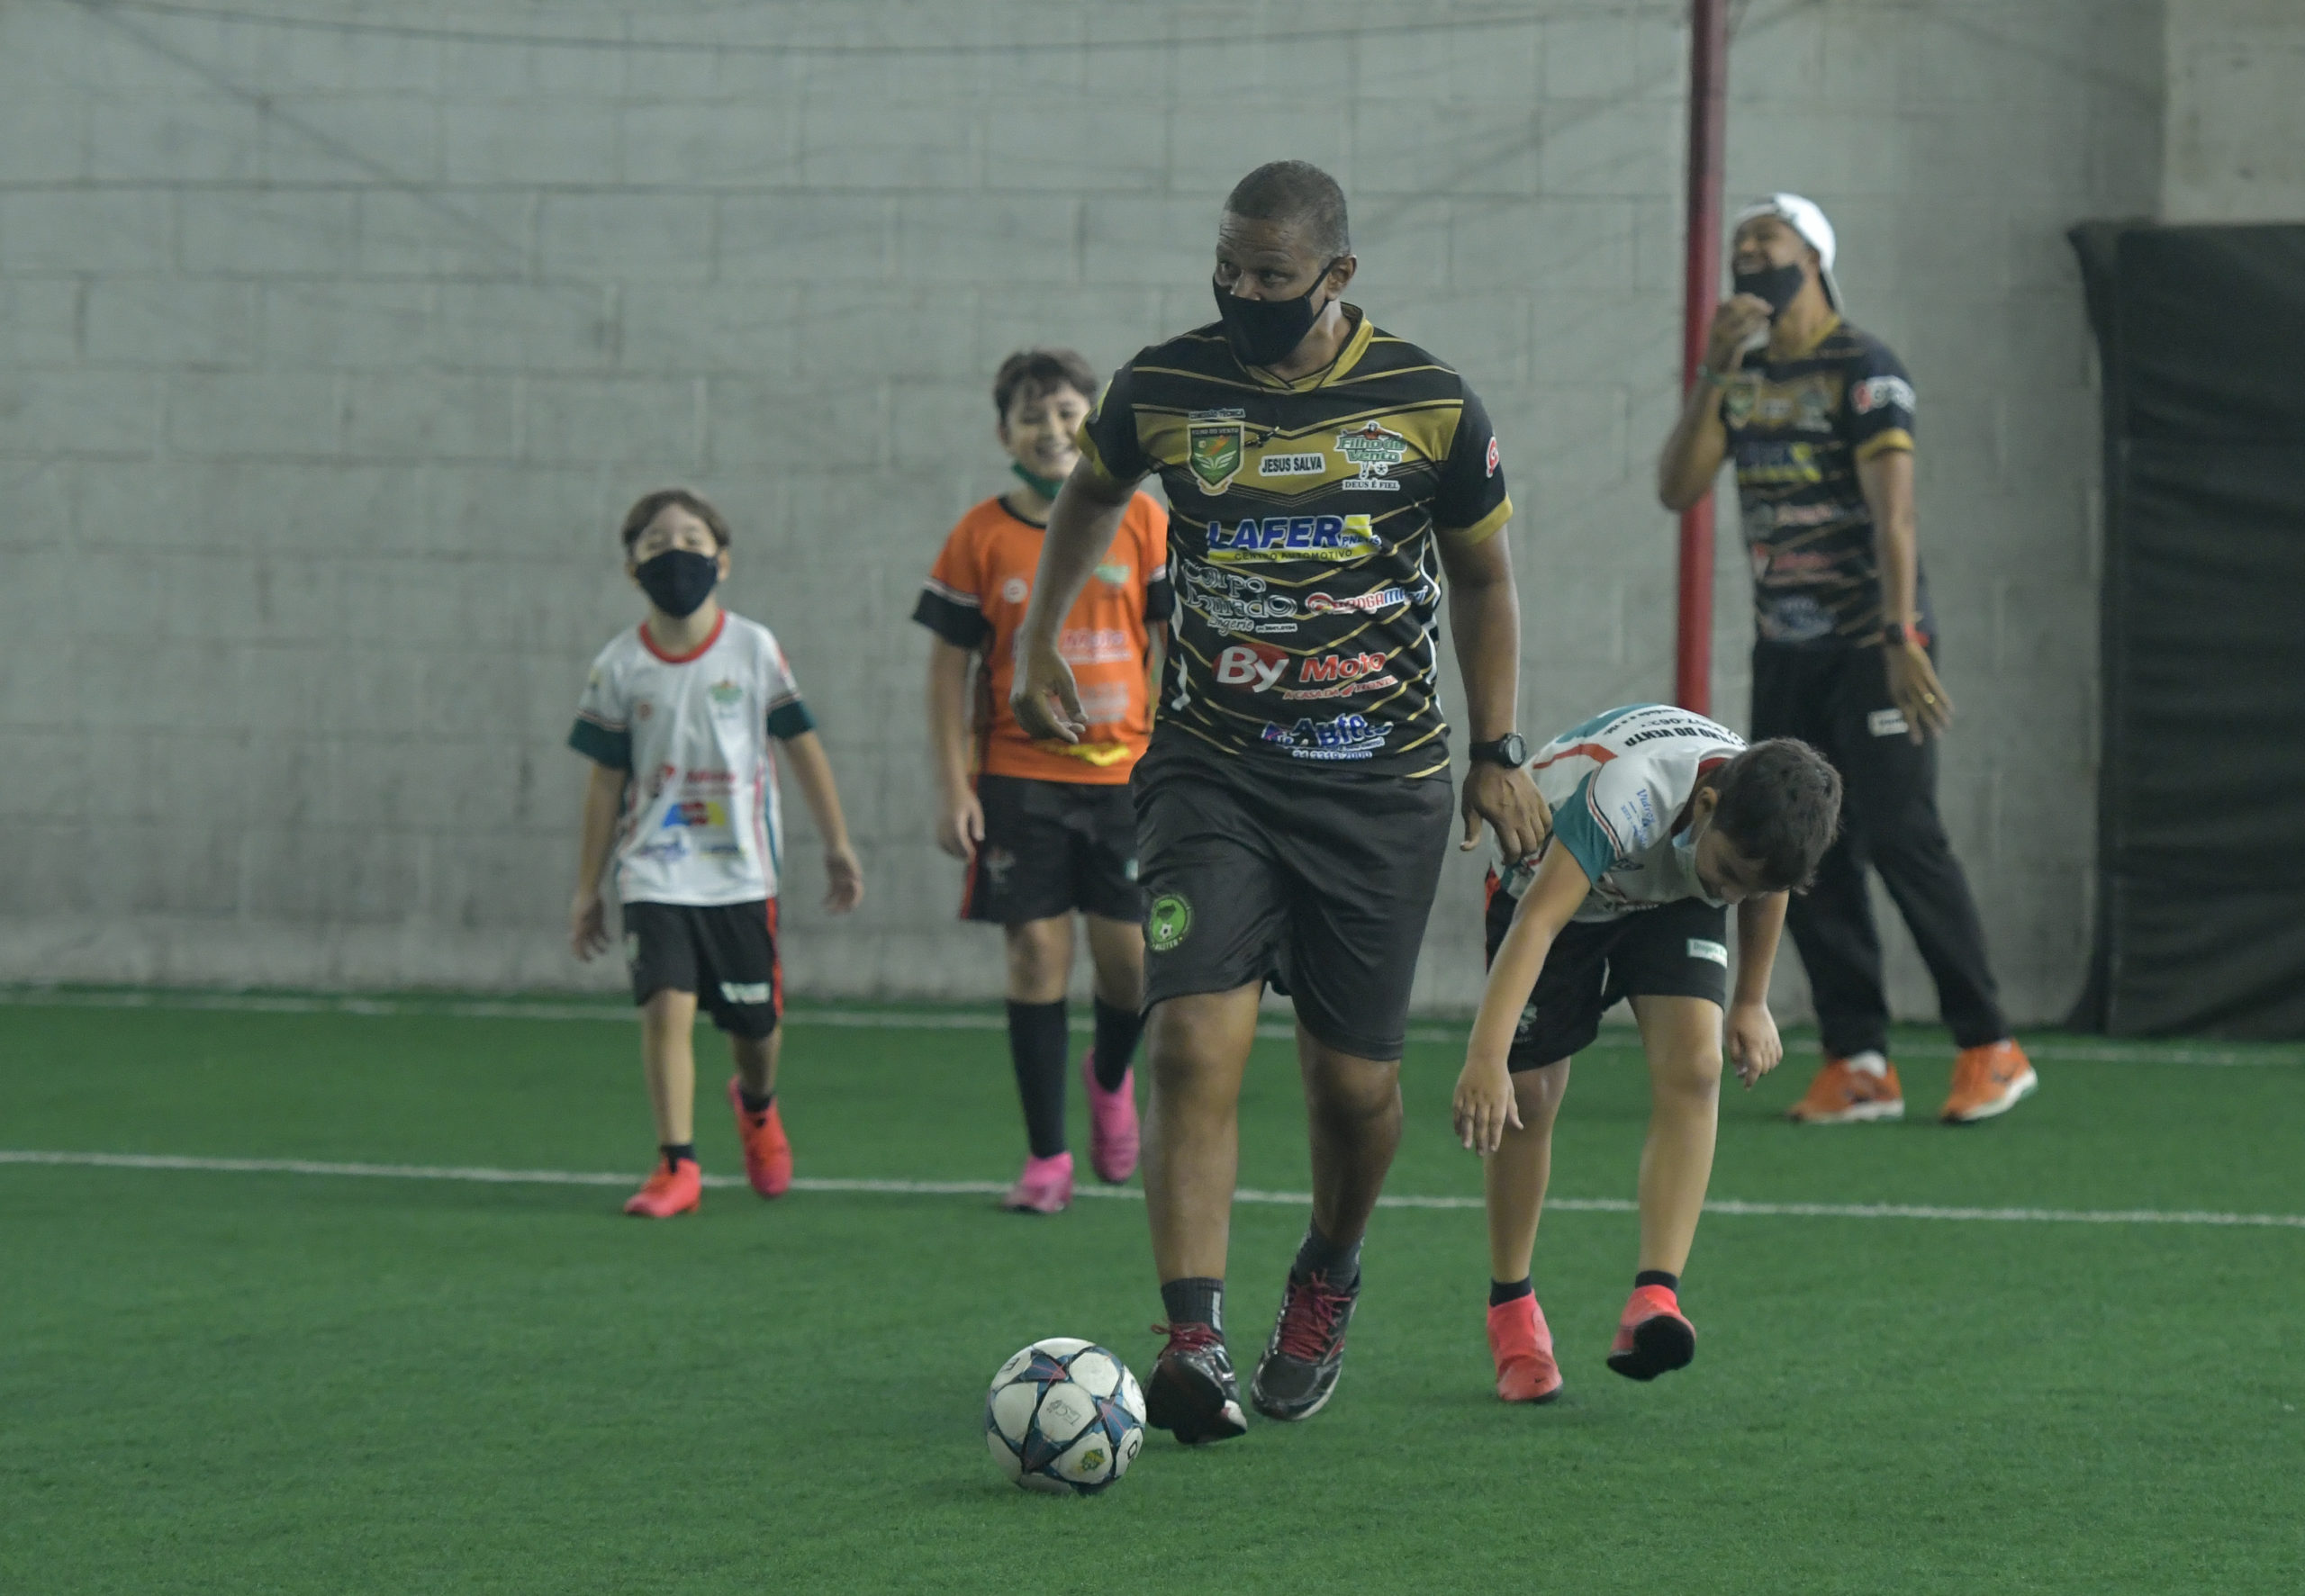 Futebol Society - Barroca Tênis Clube